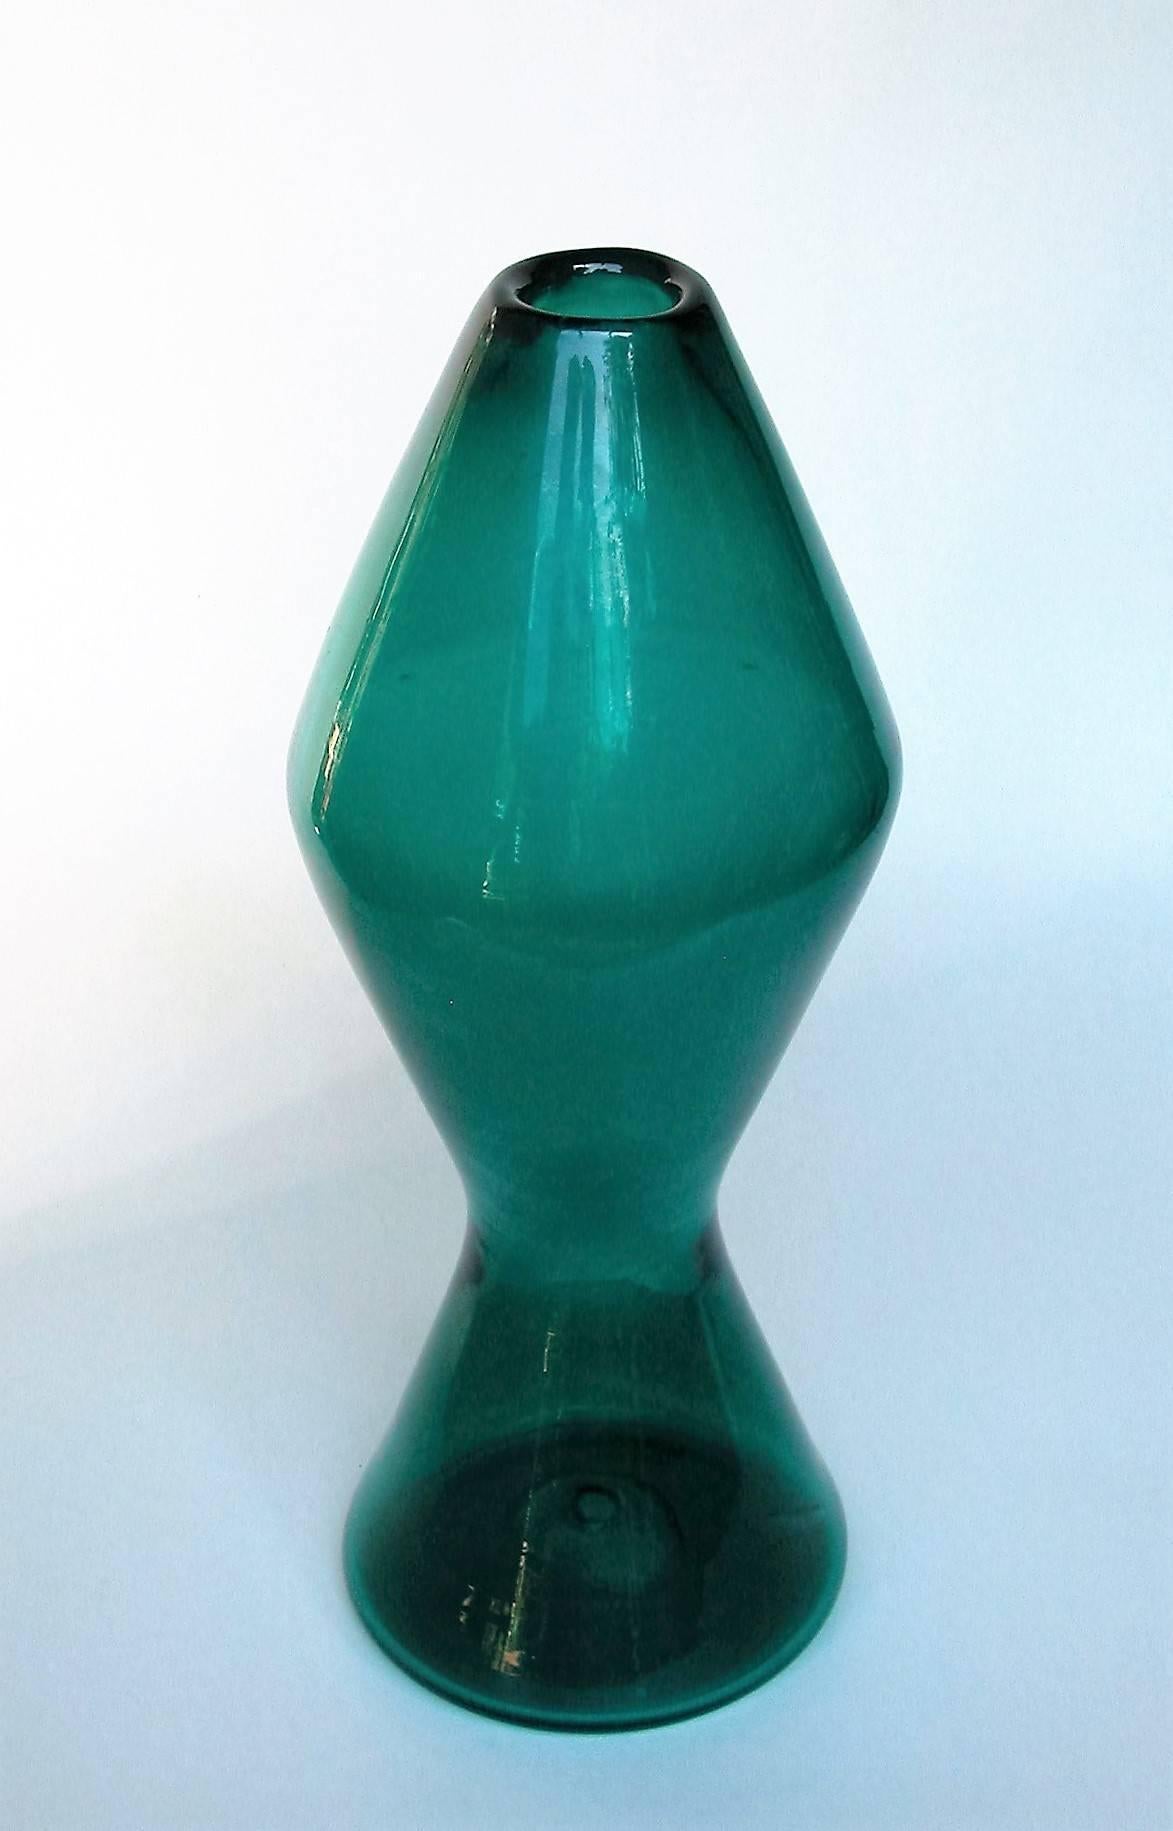 Big and rare Venini table lamp by Fulvio Bianconi, circa 1950.
 
Green glass with rest of original paper label 